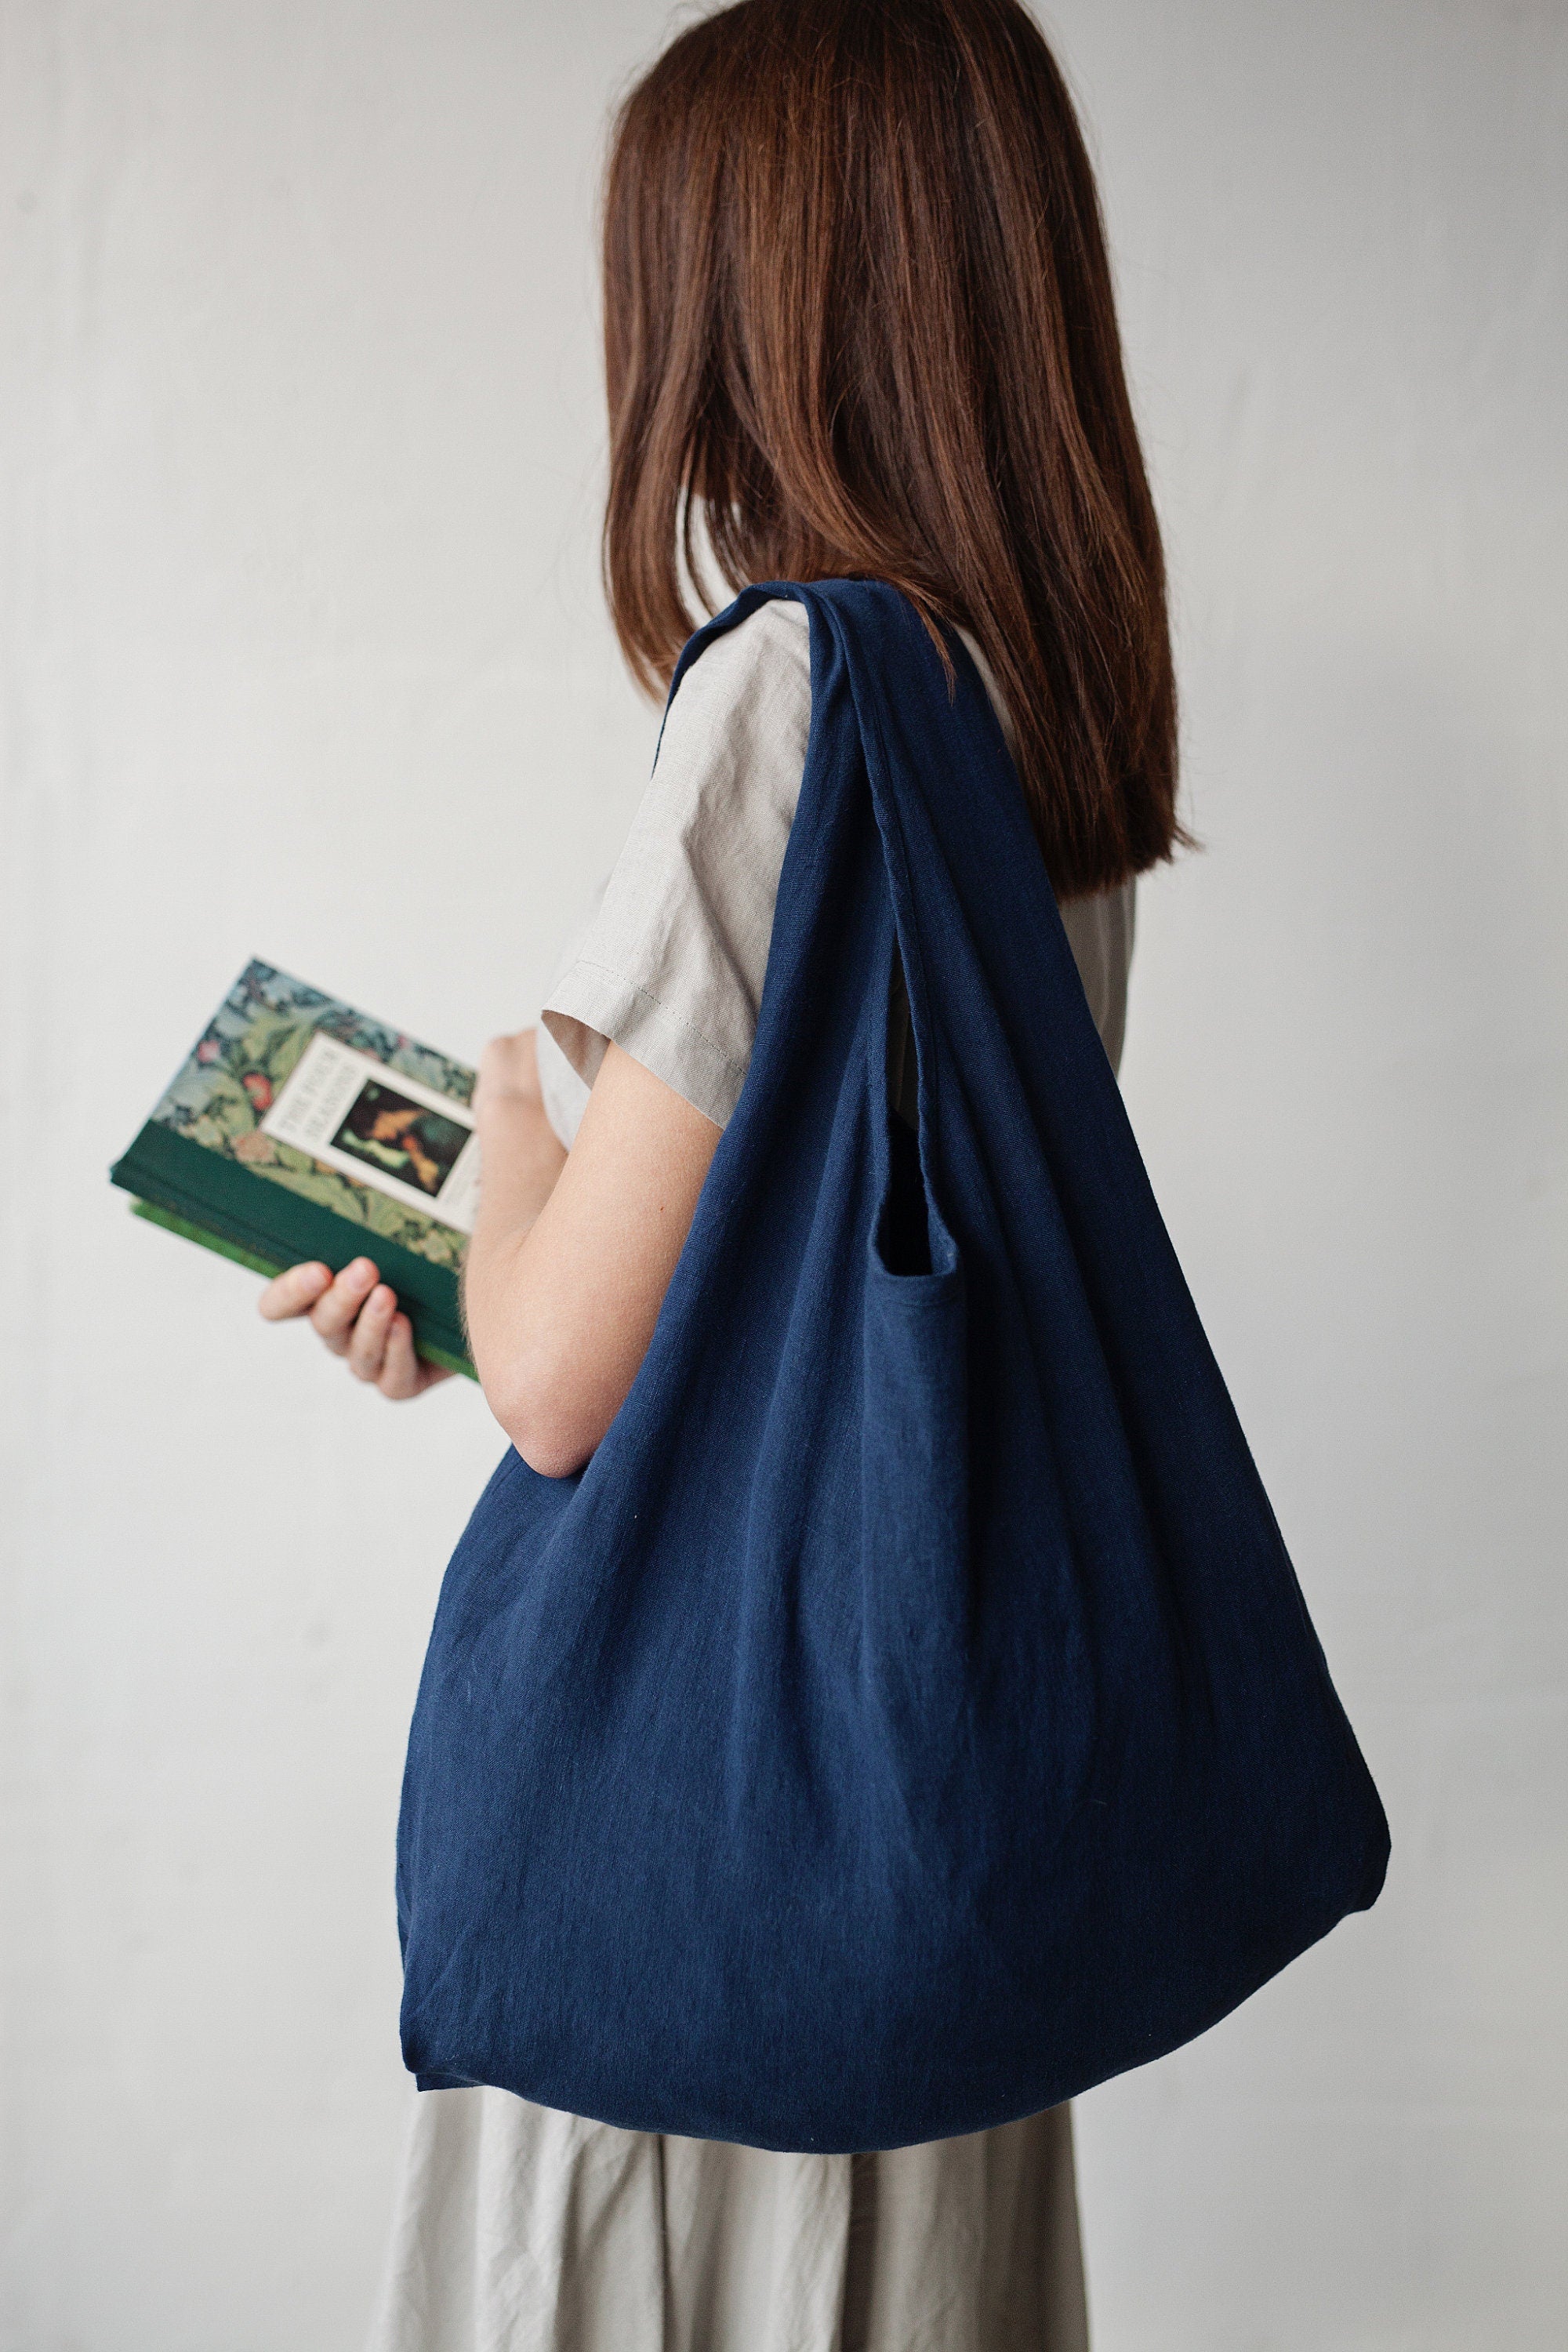 Navy Blue Grocery Linen Bag